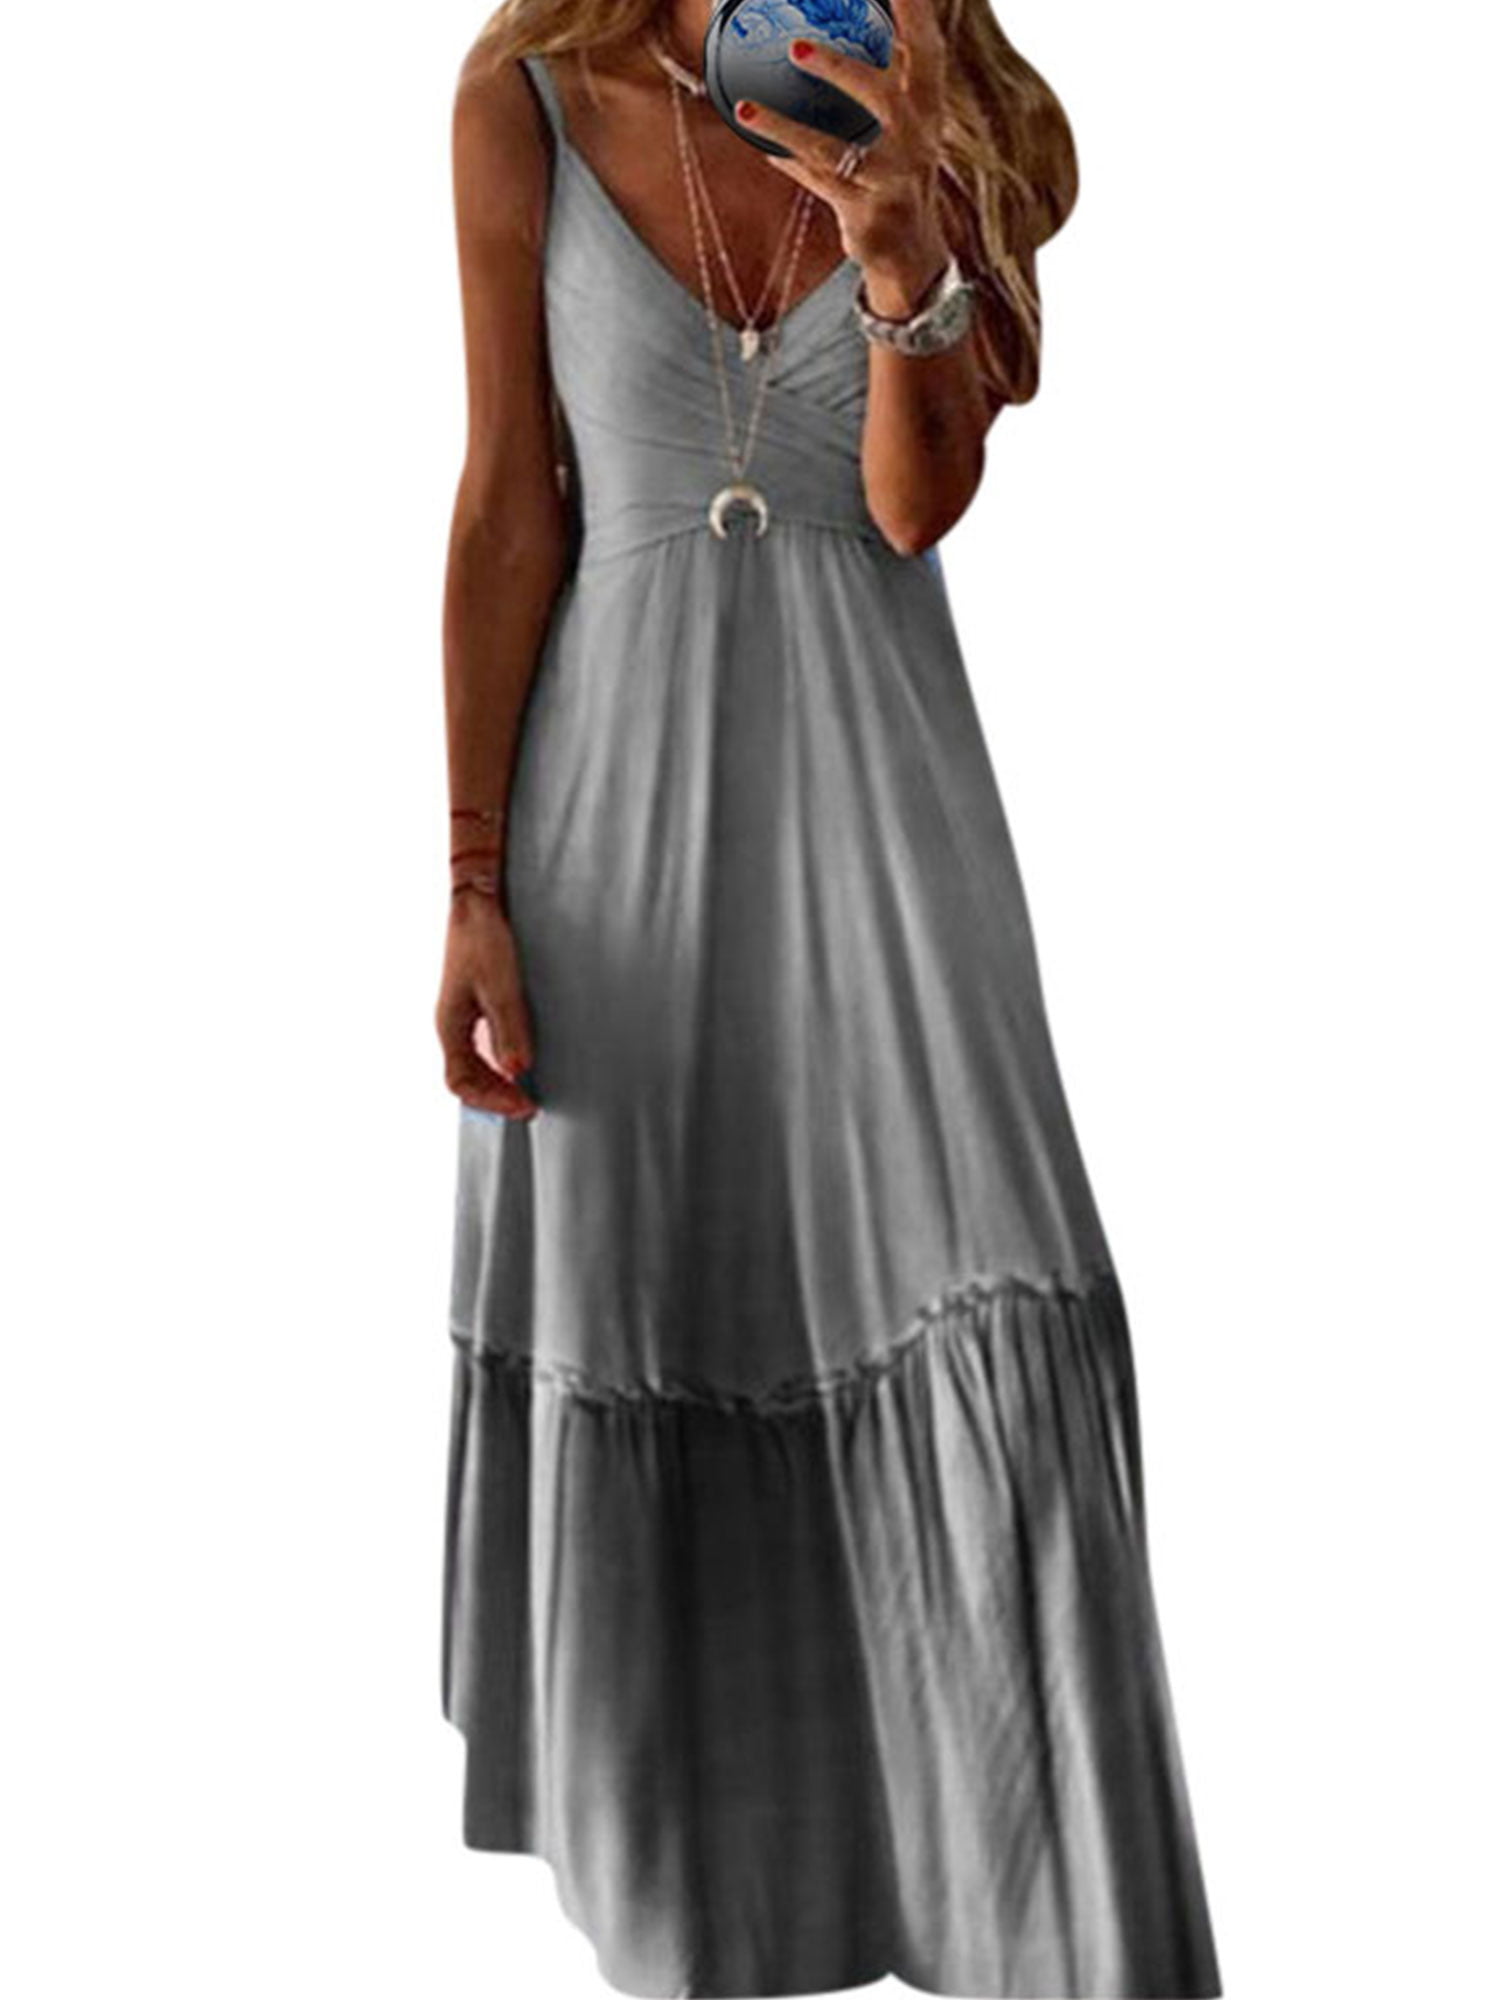 Plus Size Womens Boho Holiday Long Maxi Dress Summer Beach Kaftan Sundress USA 